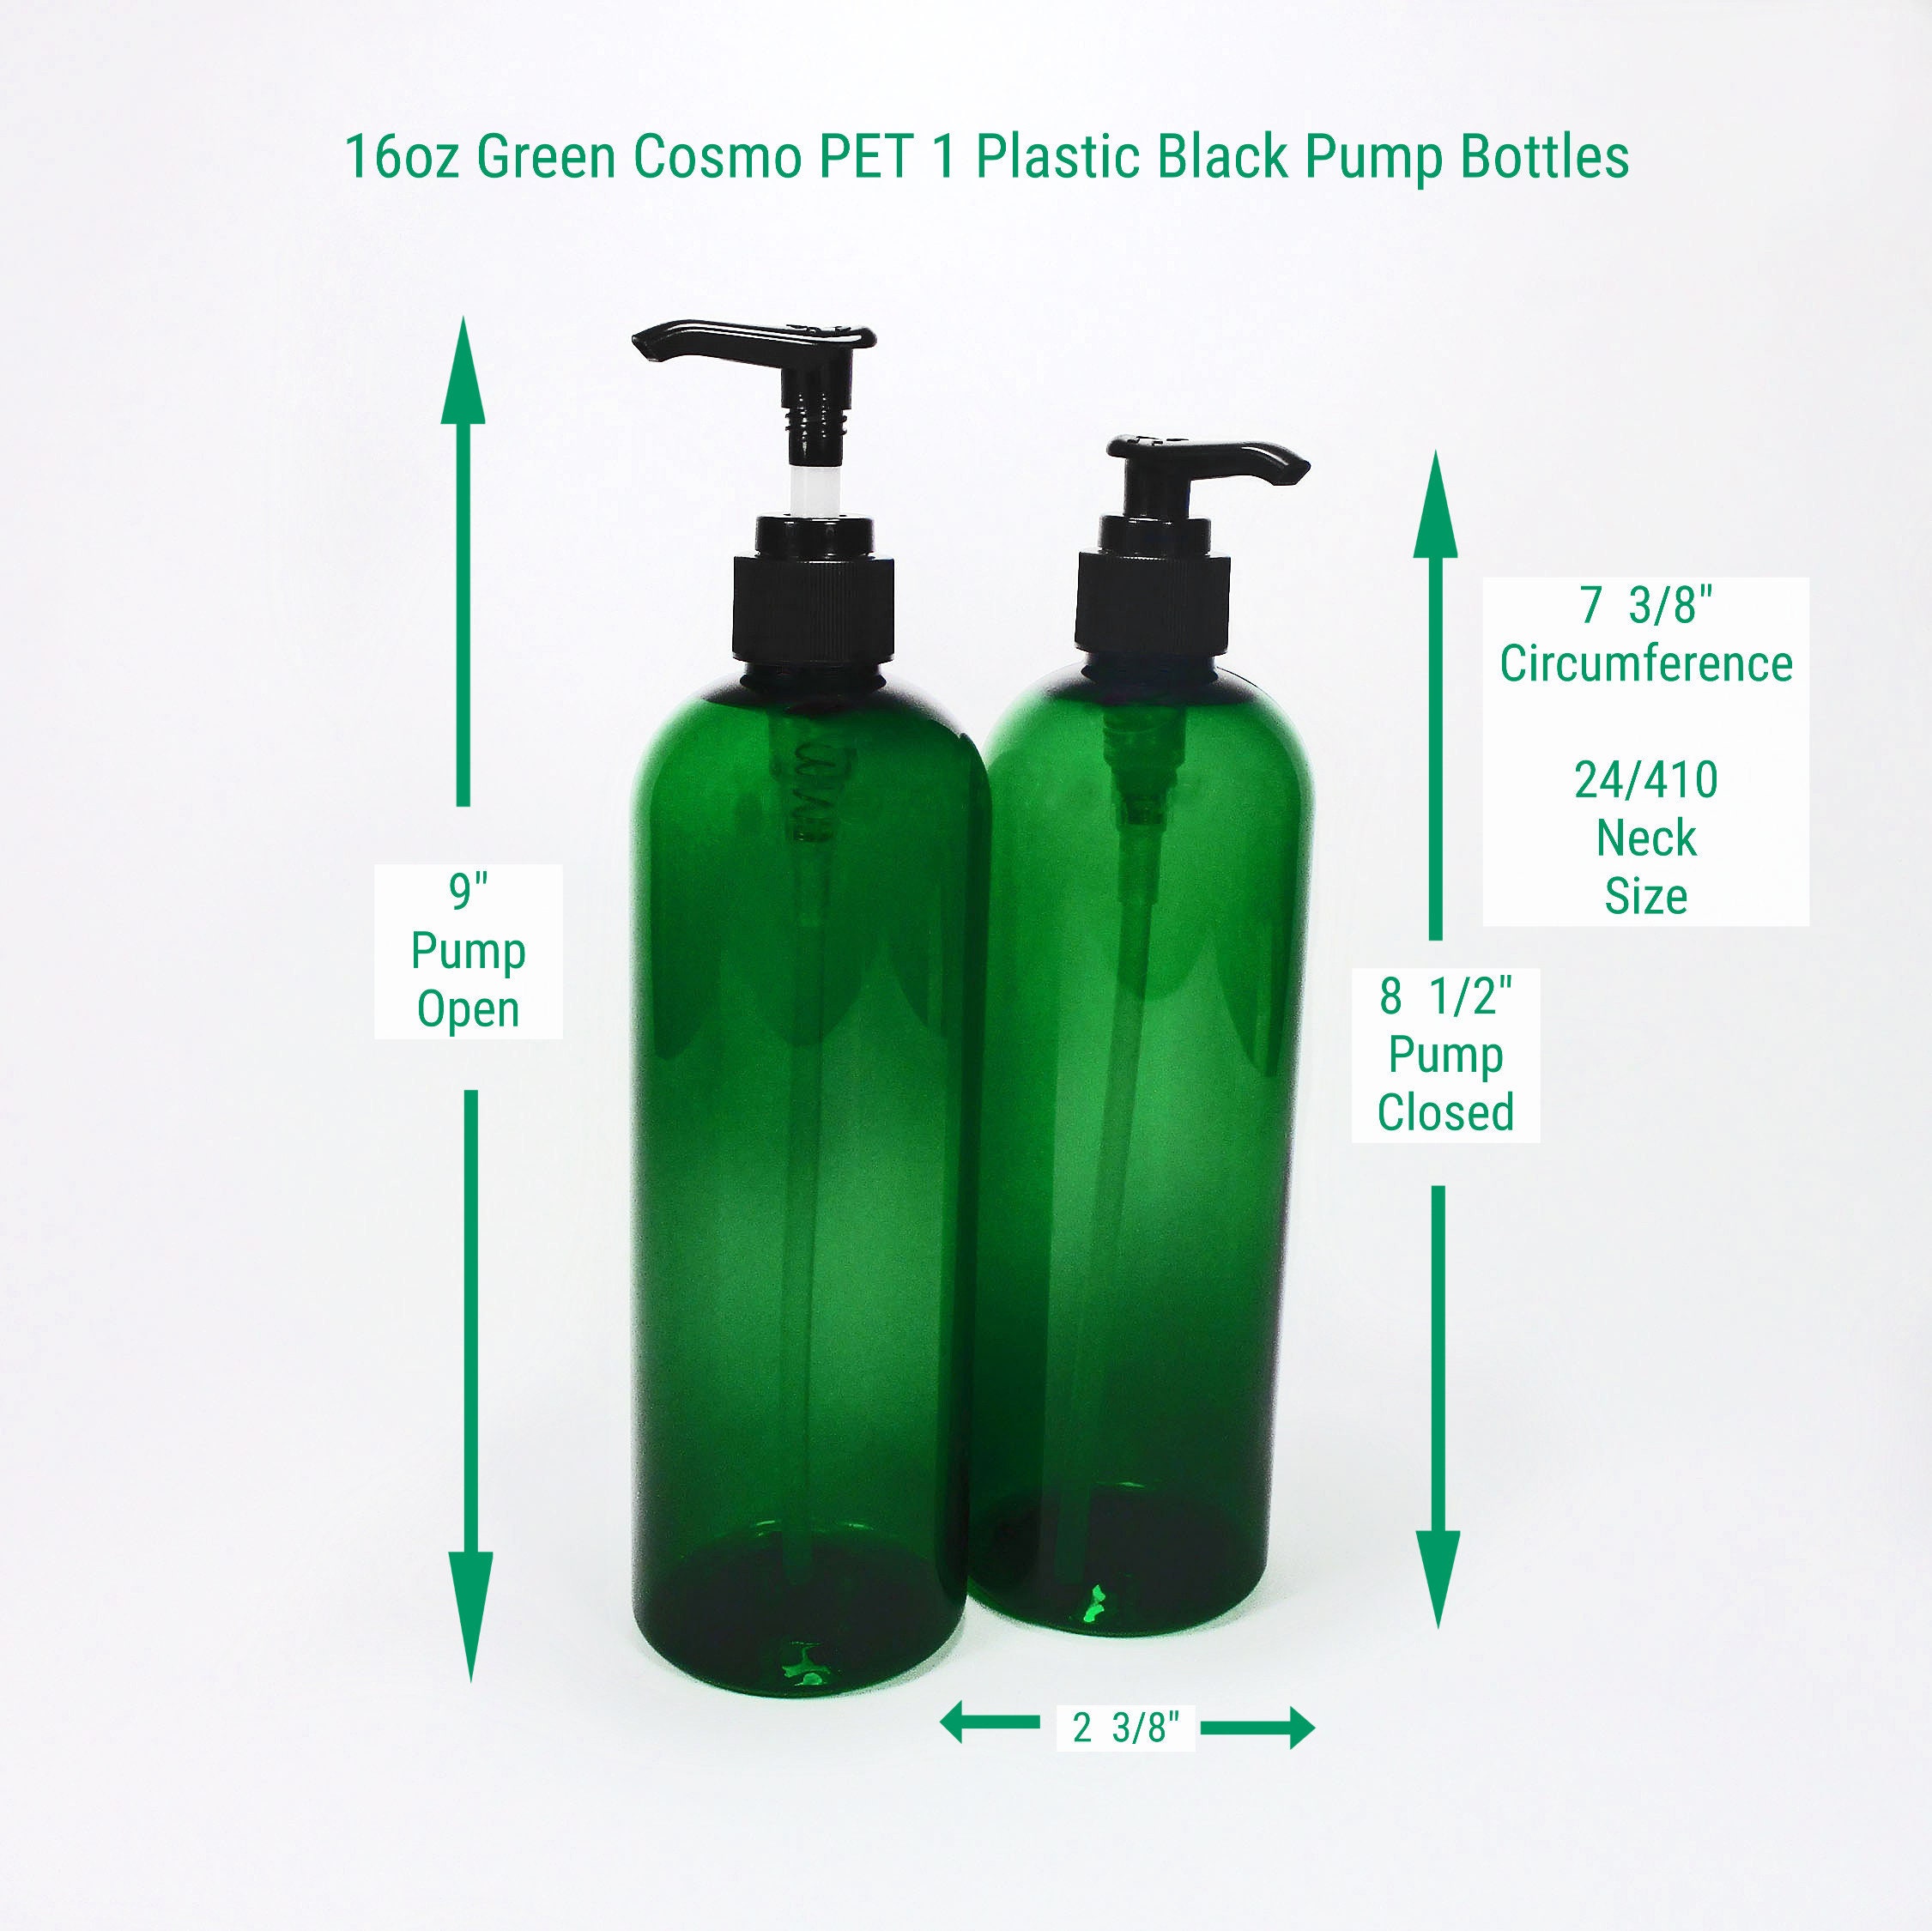 2 Pcs Travel Liquid Container Cosmetic Bottles Empty Liquid Bottles Travel Small  Plastic Bottles Shampoo Dispenser Bottle